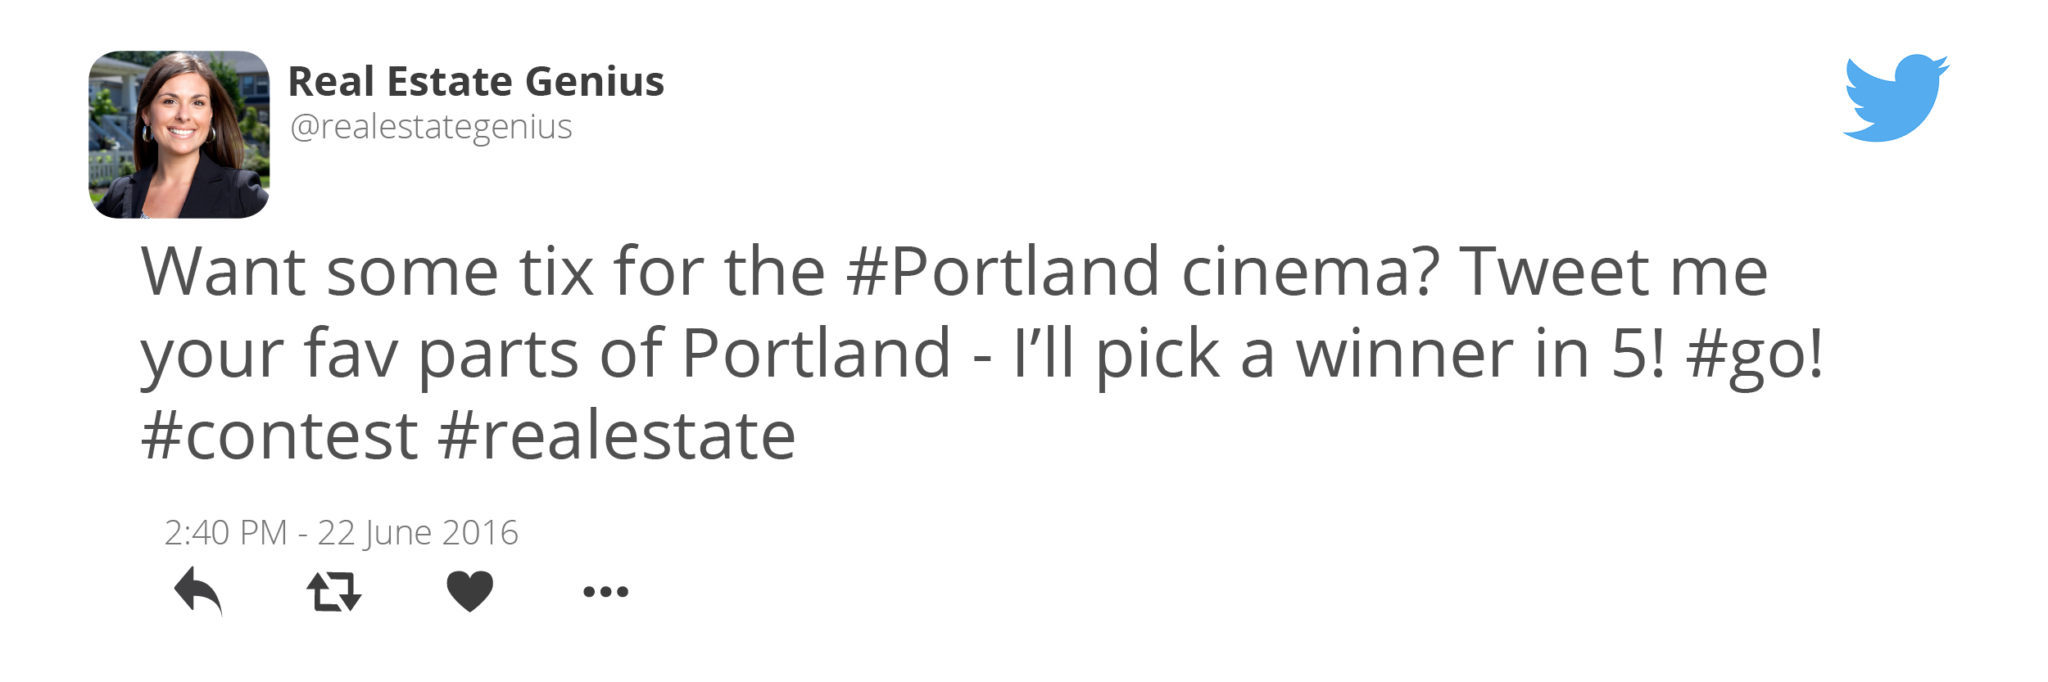 Portland Cinema Tickets